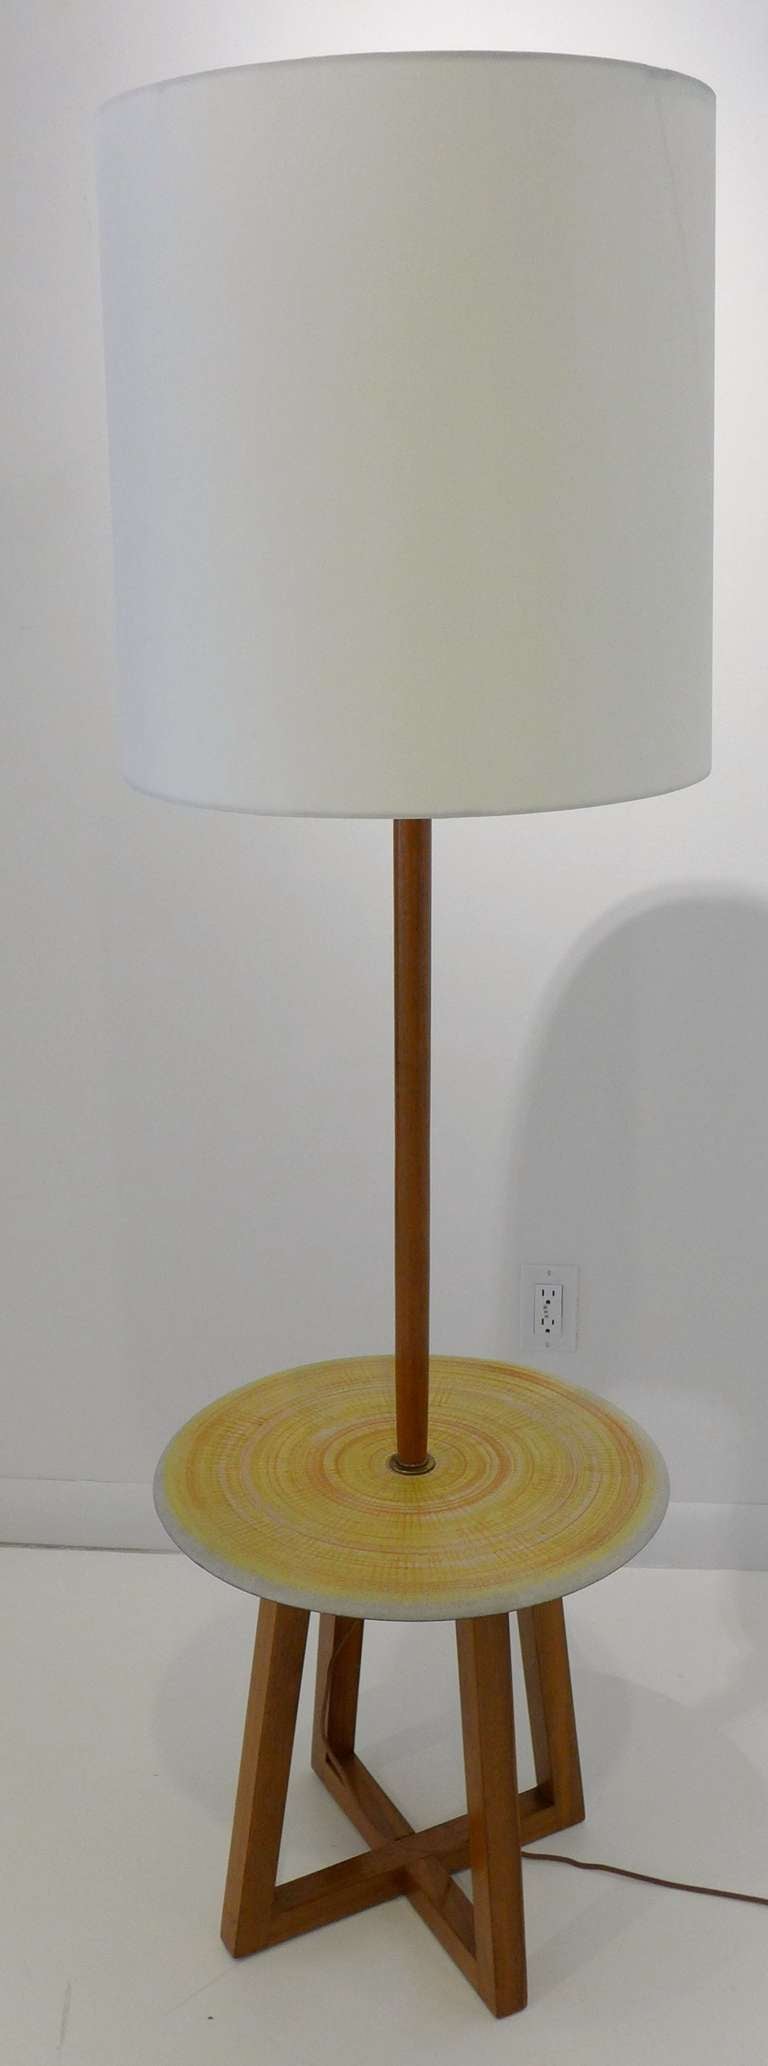 Mid-Century Modern Design Technics Lamp Table with Ceramic Shelf